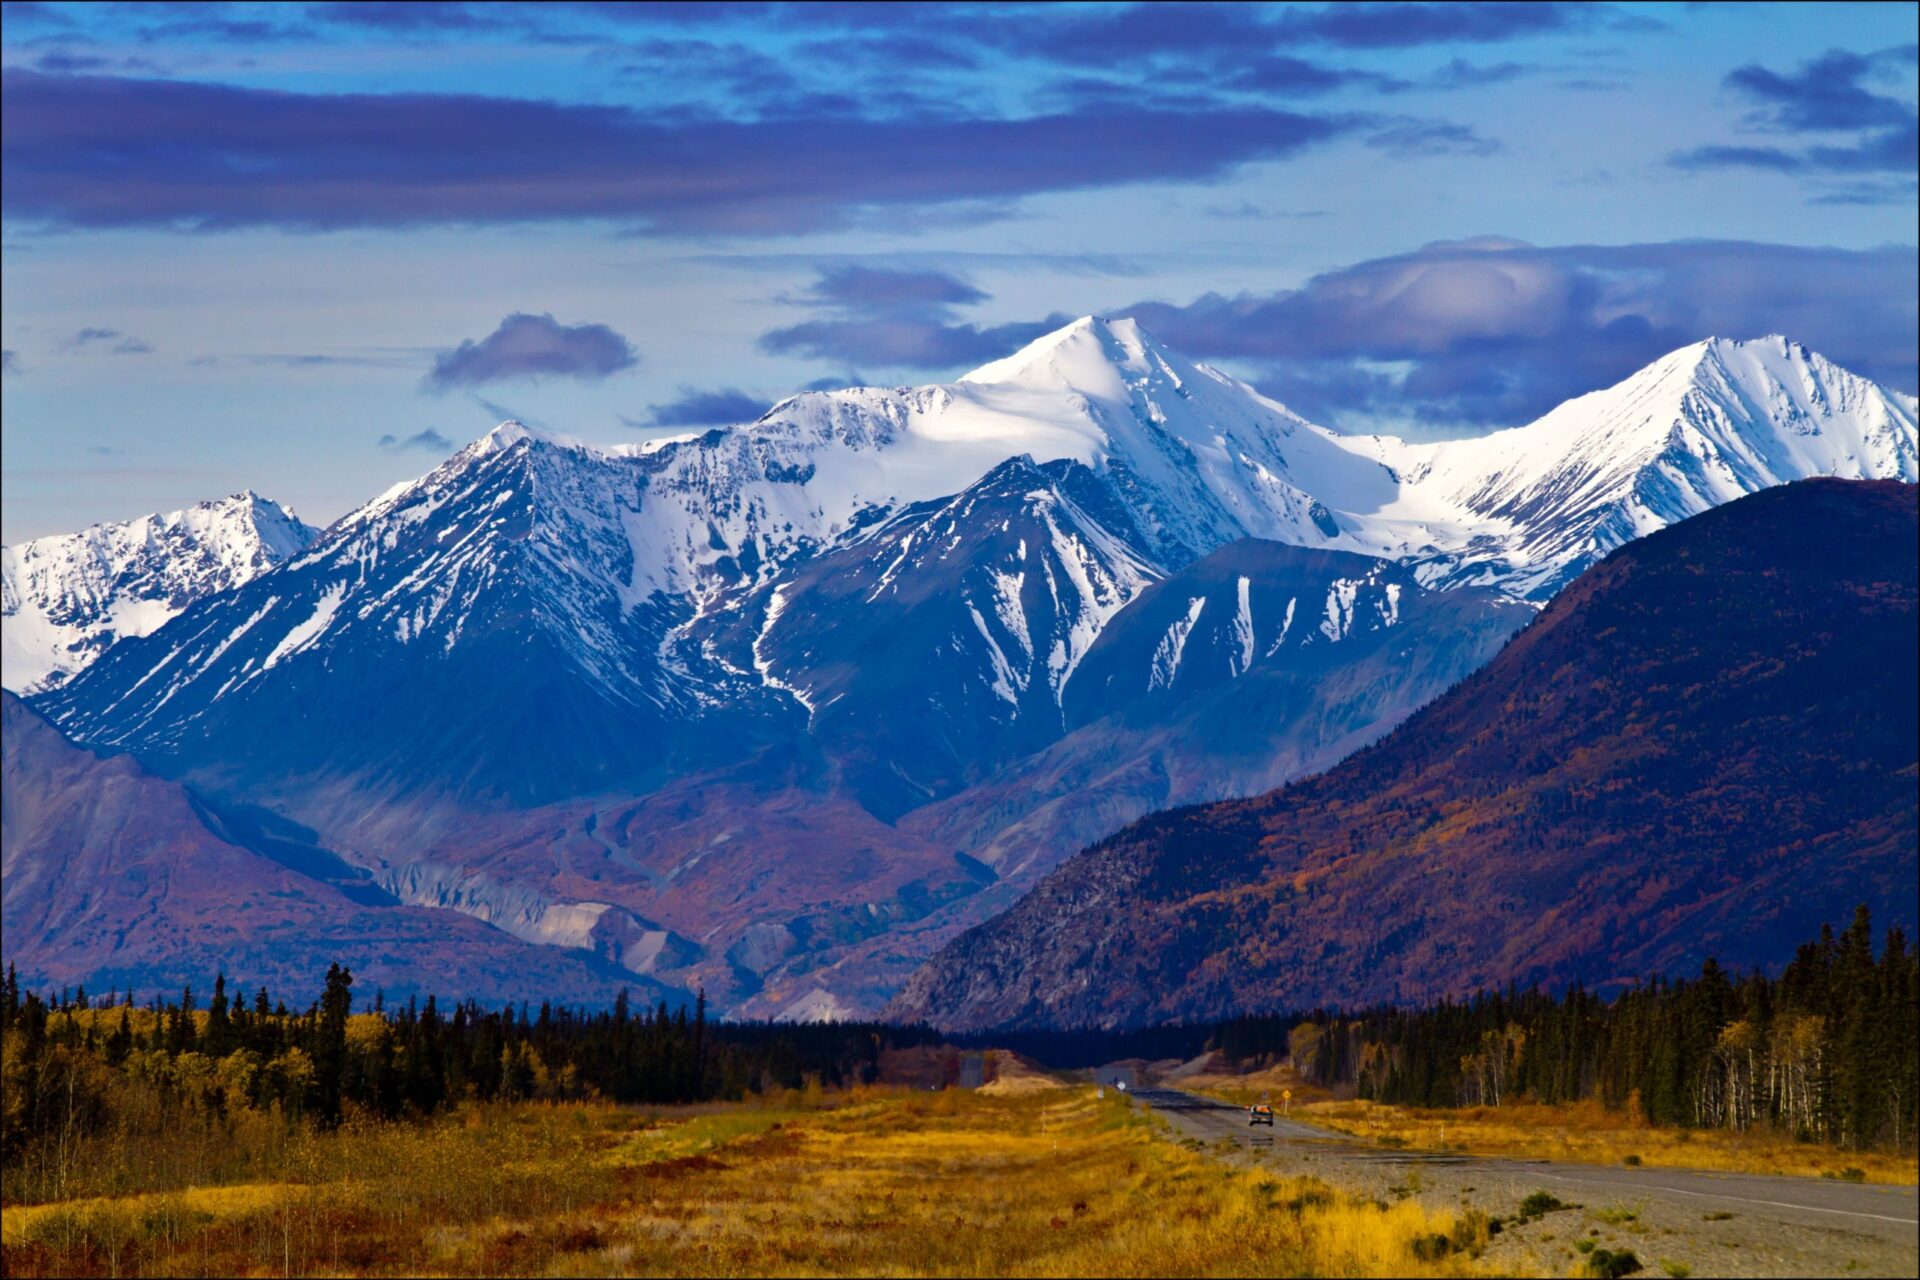 Postcard-perfect mountains in Canada's Yukon Territories